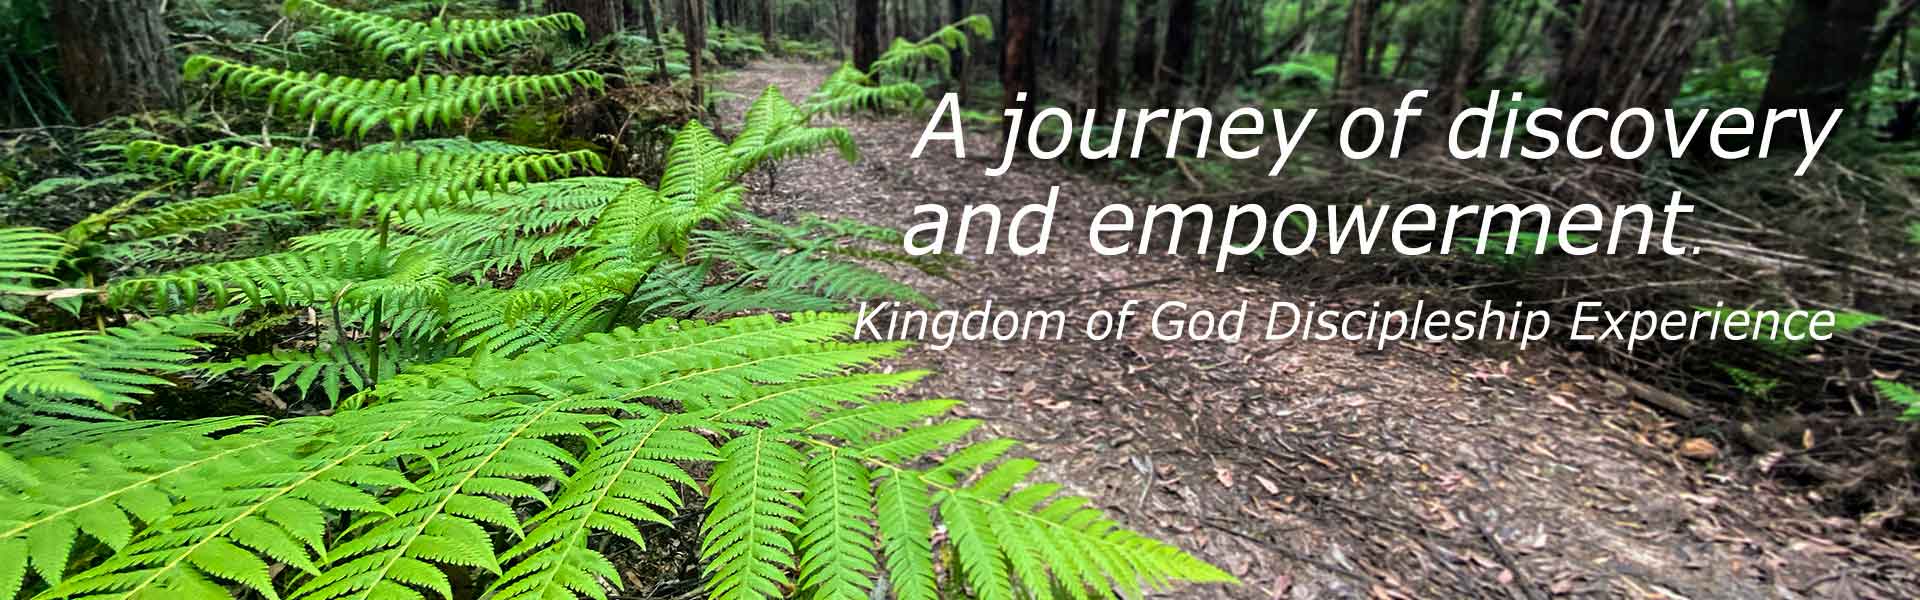 Kingdom-of-God-Discpleship-Experience-Discovery-Empowerment